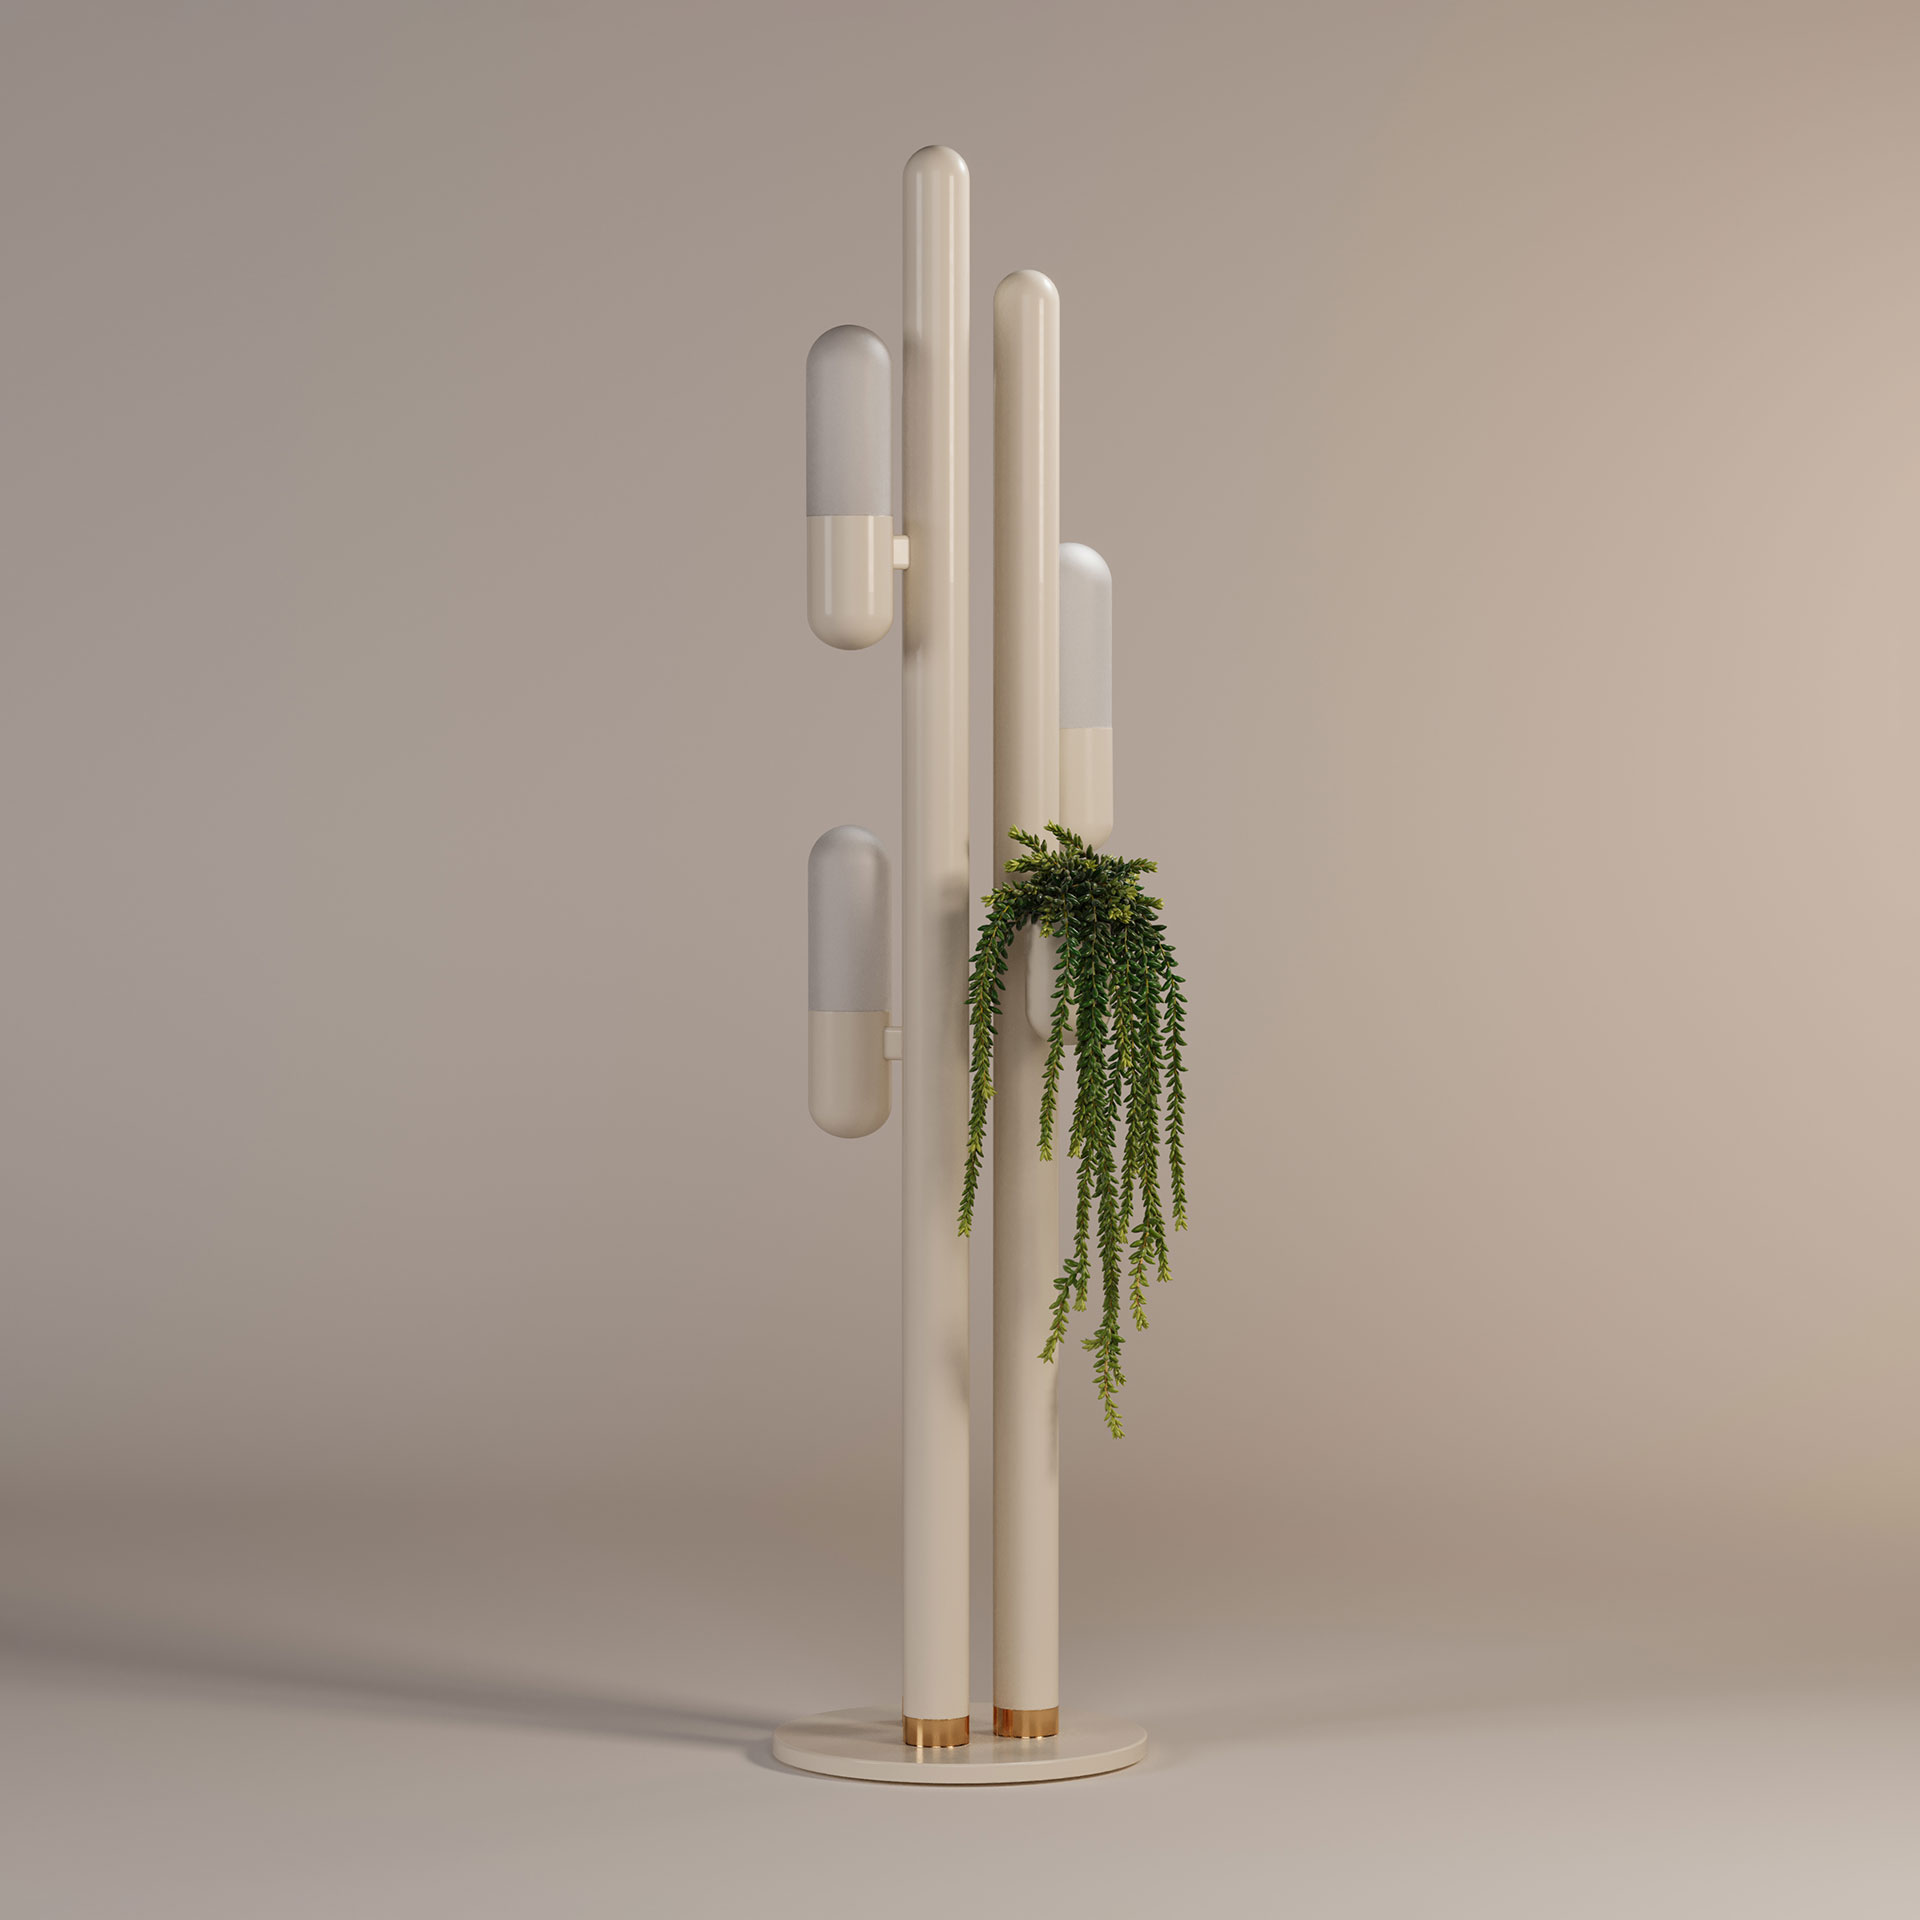 Cactus floor lamp by creativemary | luxury lighting